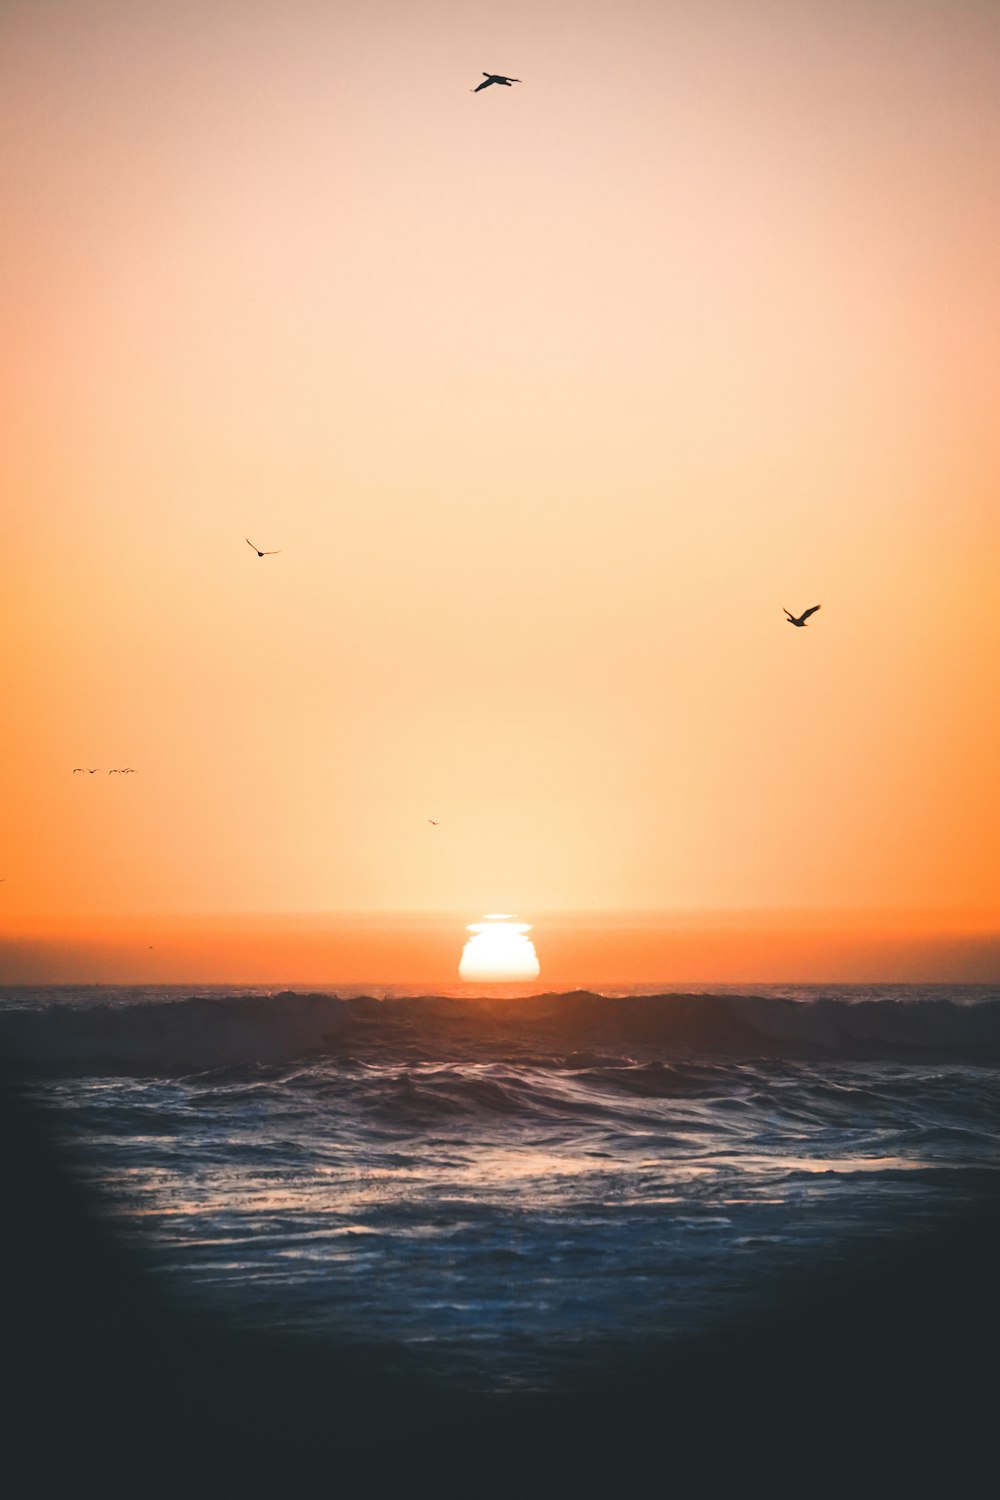 silhouette of birds flying above ocean during sunset